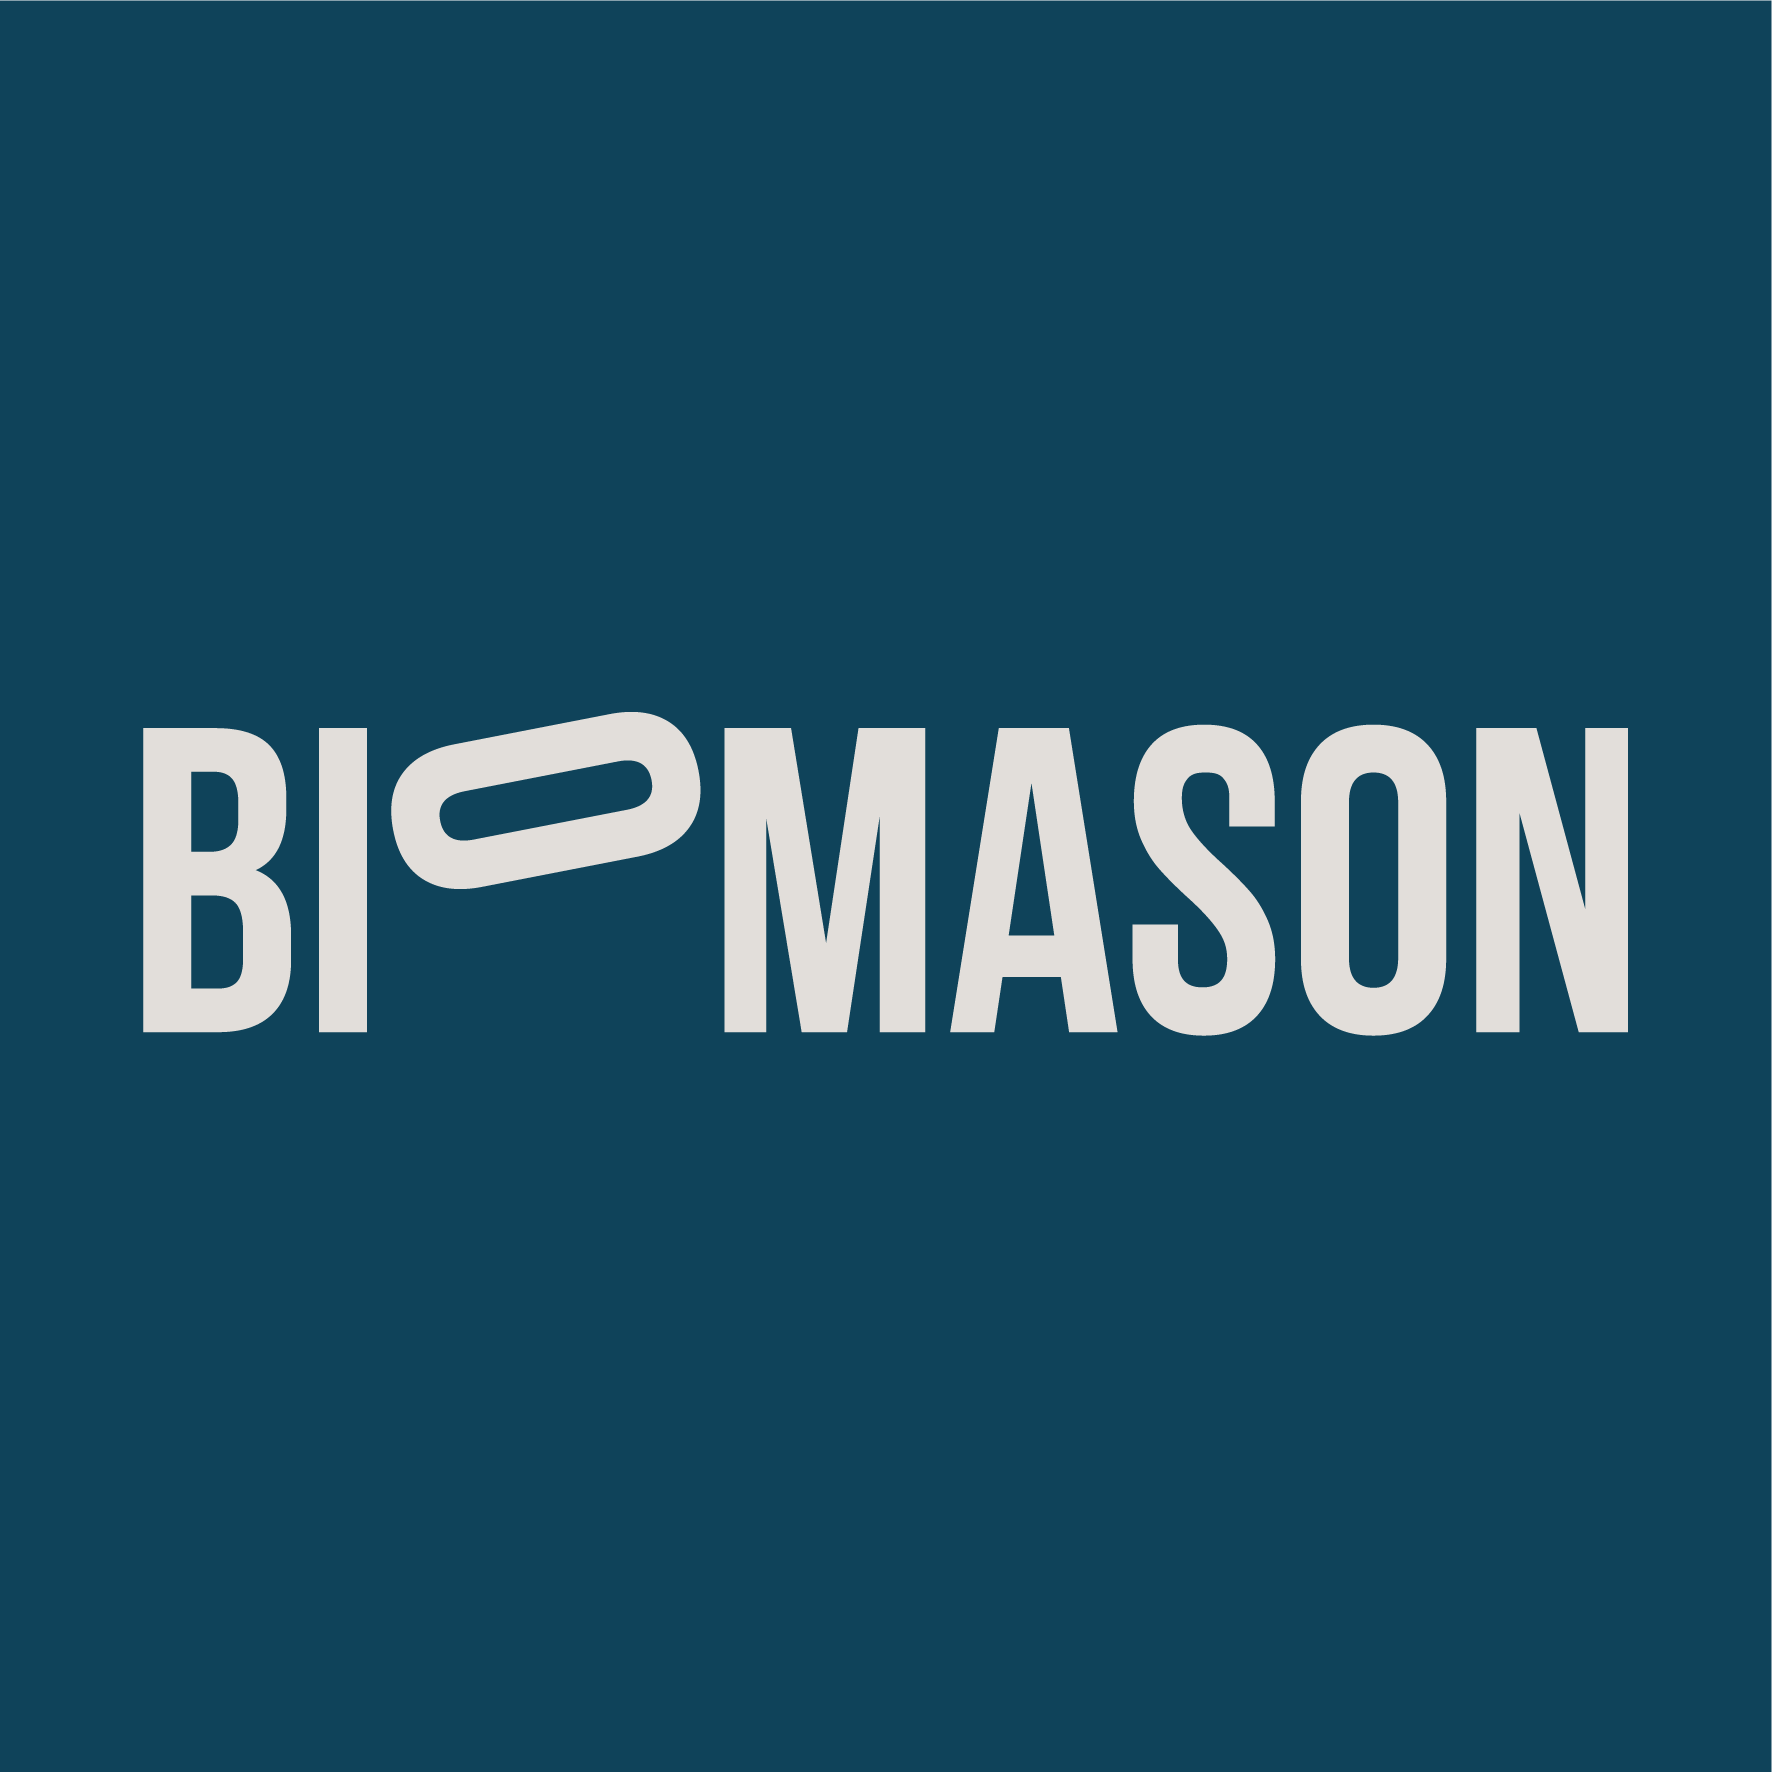 Biomason, Inc.